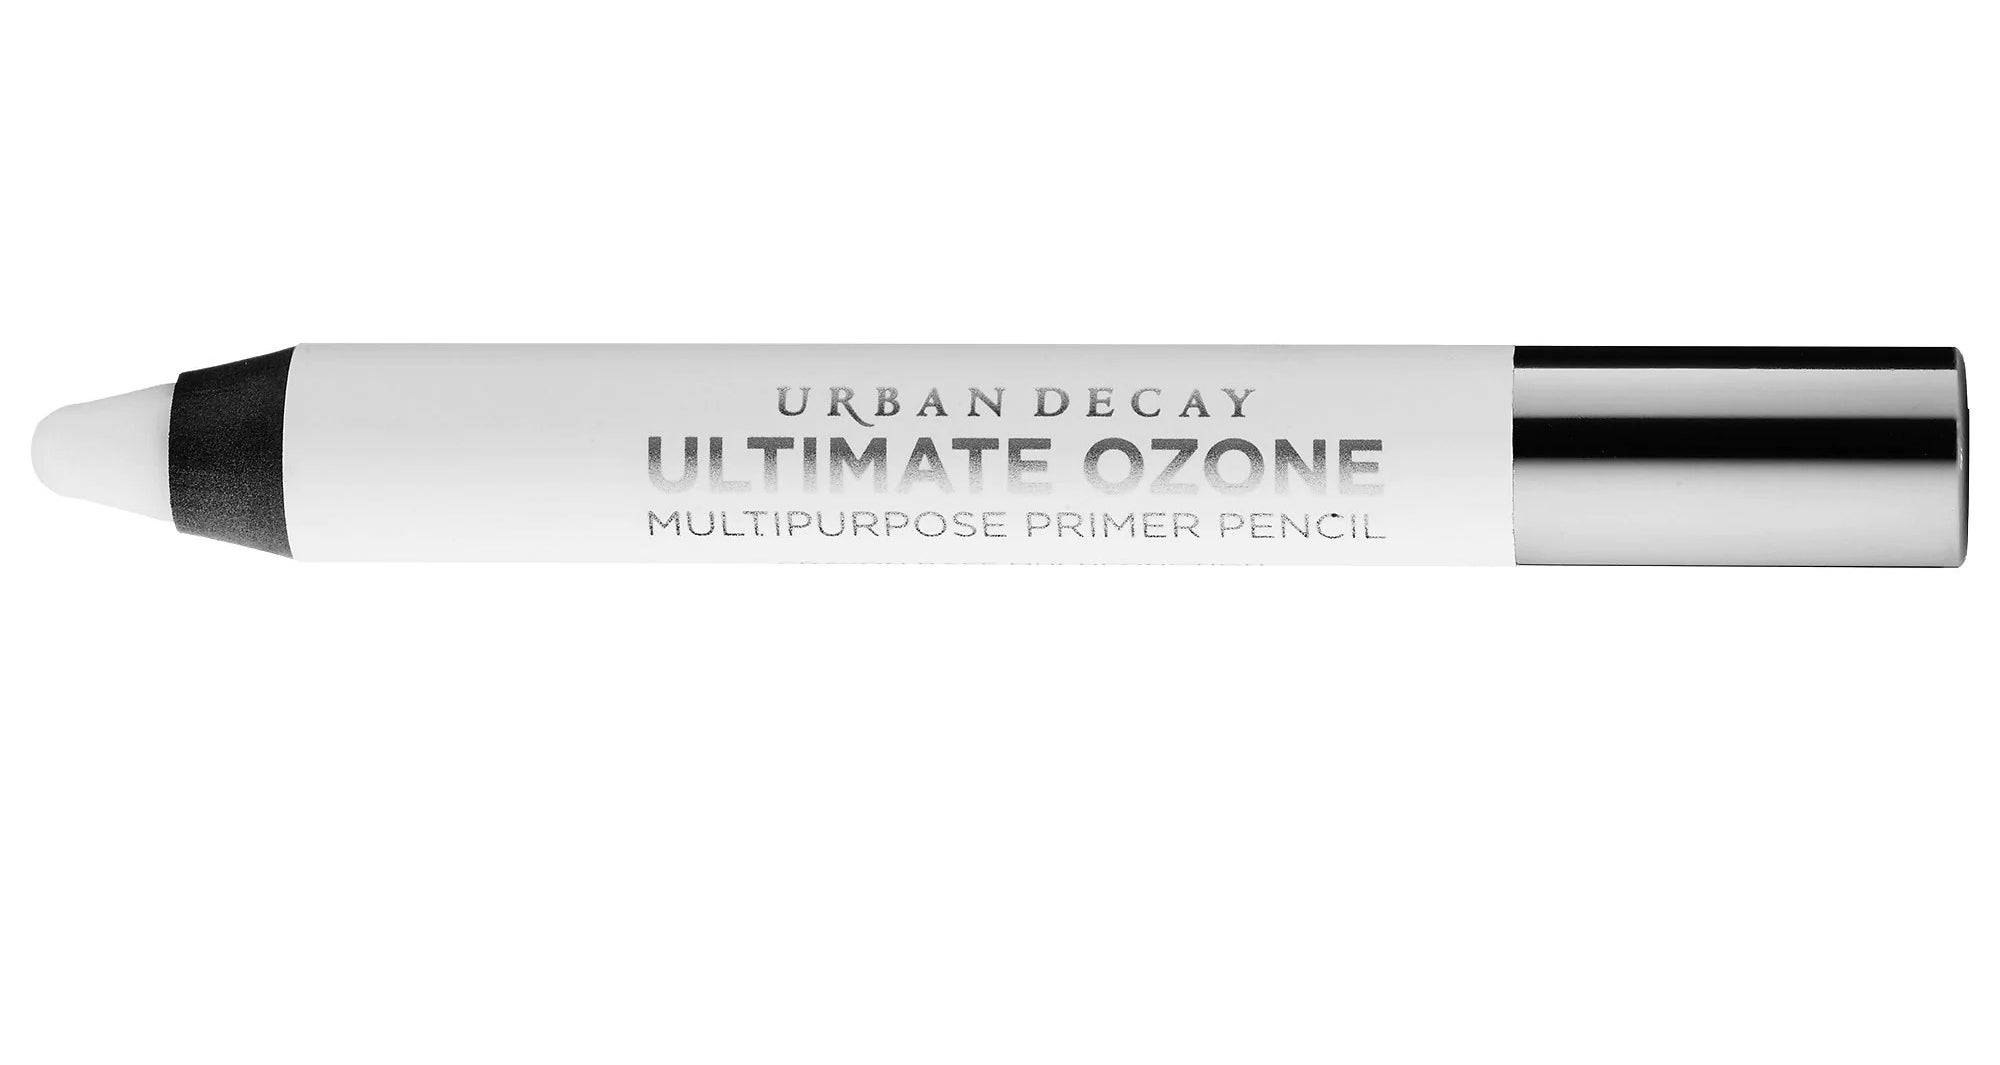 A clear lip pencil on a plain background